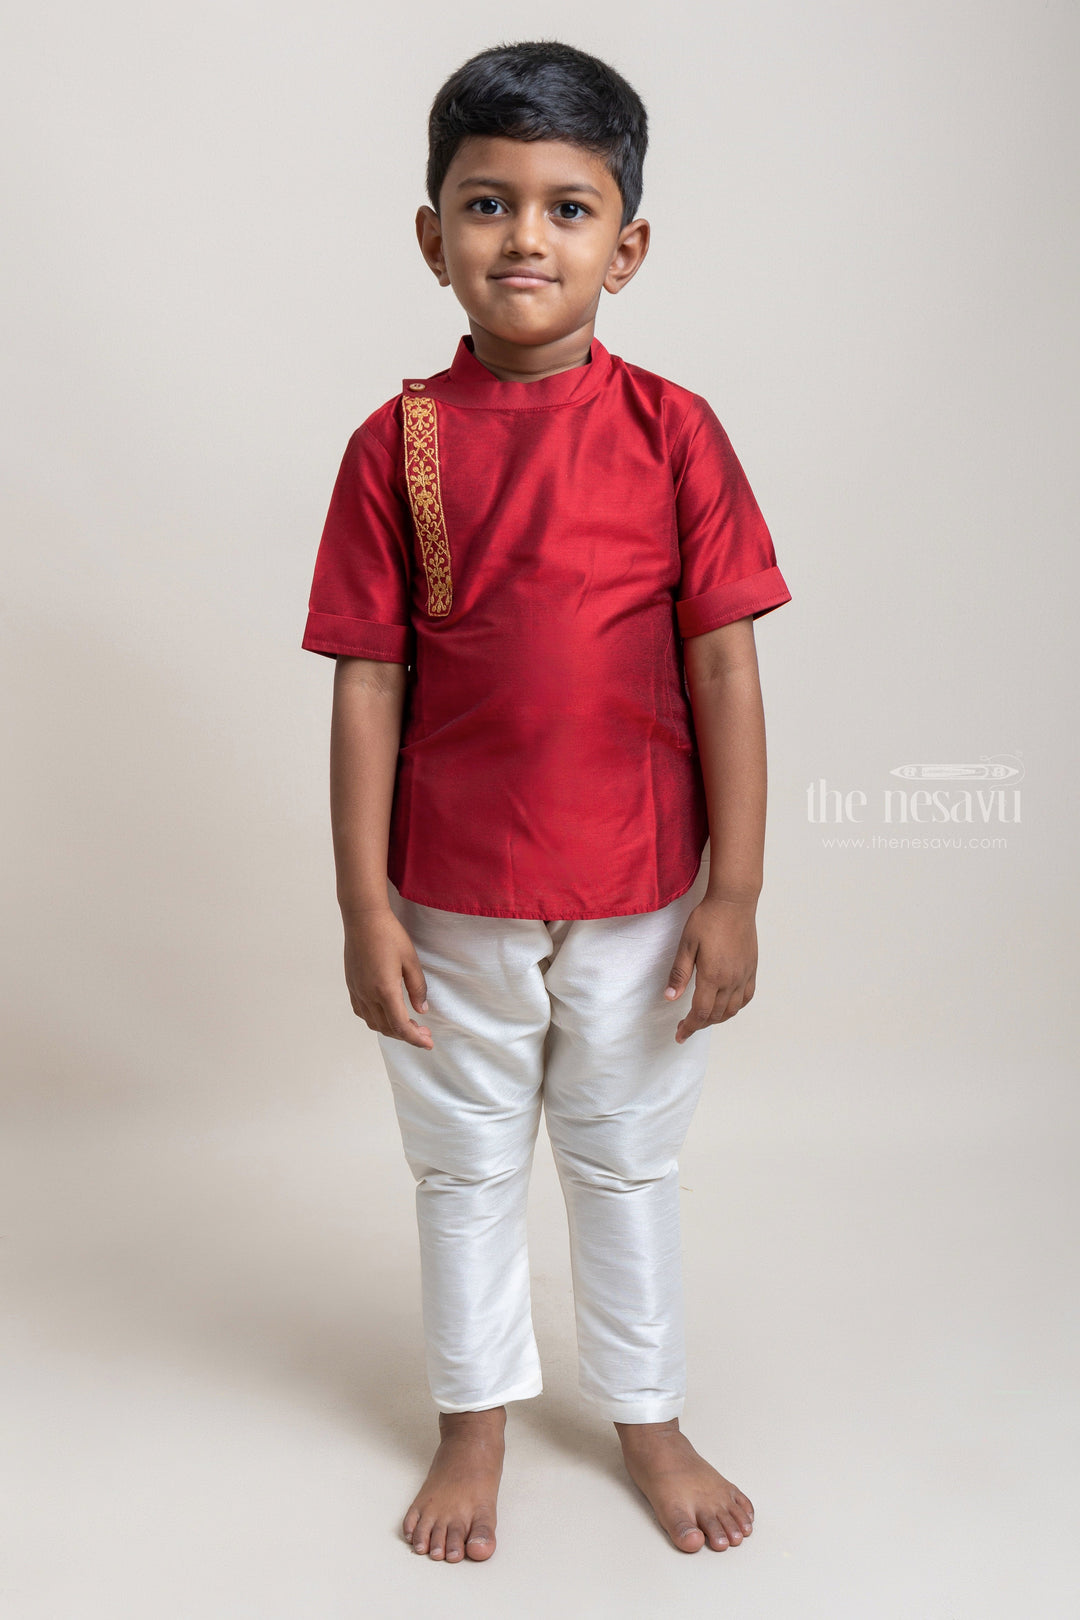 The Nesavu Boys Silk Shirt Gorgeous Red Soft Cotton Shirt For Little Boys Nesavu 12 (3M) / Red / Silk Blend BS016A-12 Ethnic Cotton Shirts For Boys | Premium Boys Wear | The Nesavu